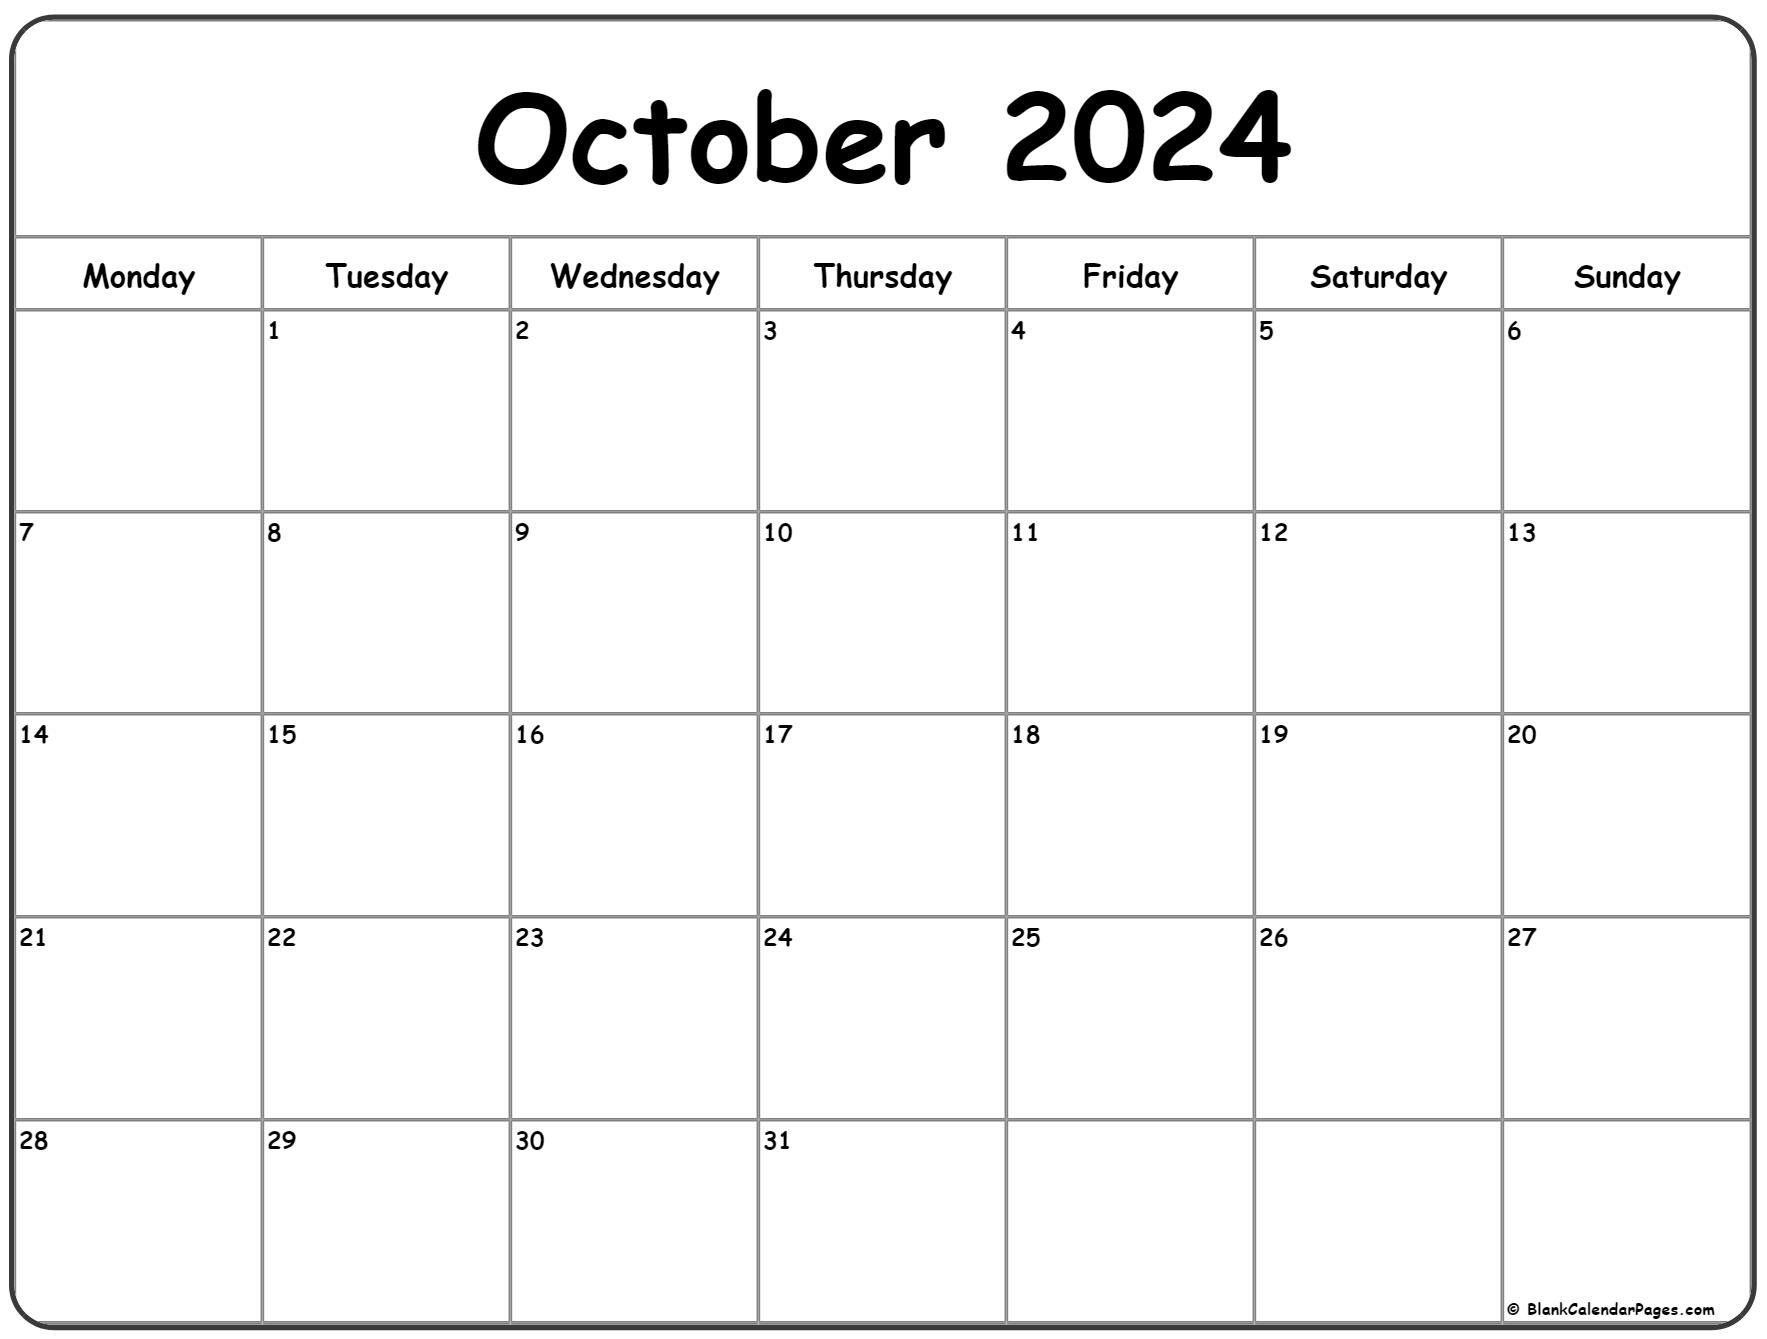 October 2024 Monday Calendar | Monday To Sunday for Printable Calendar October 2024